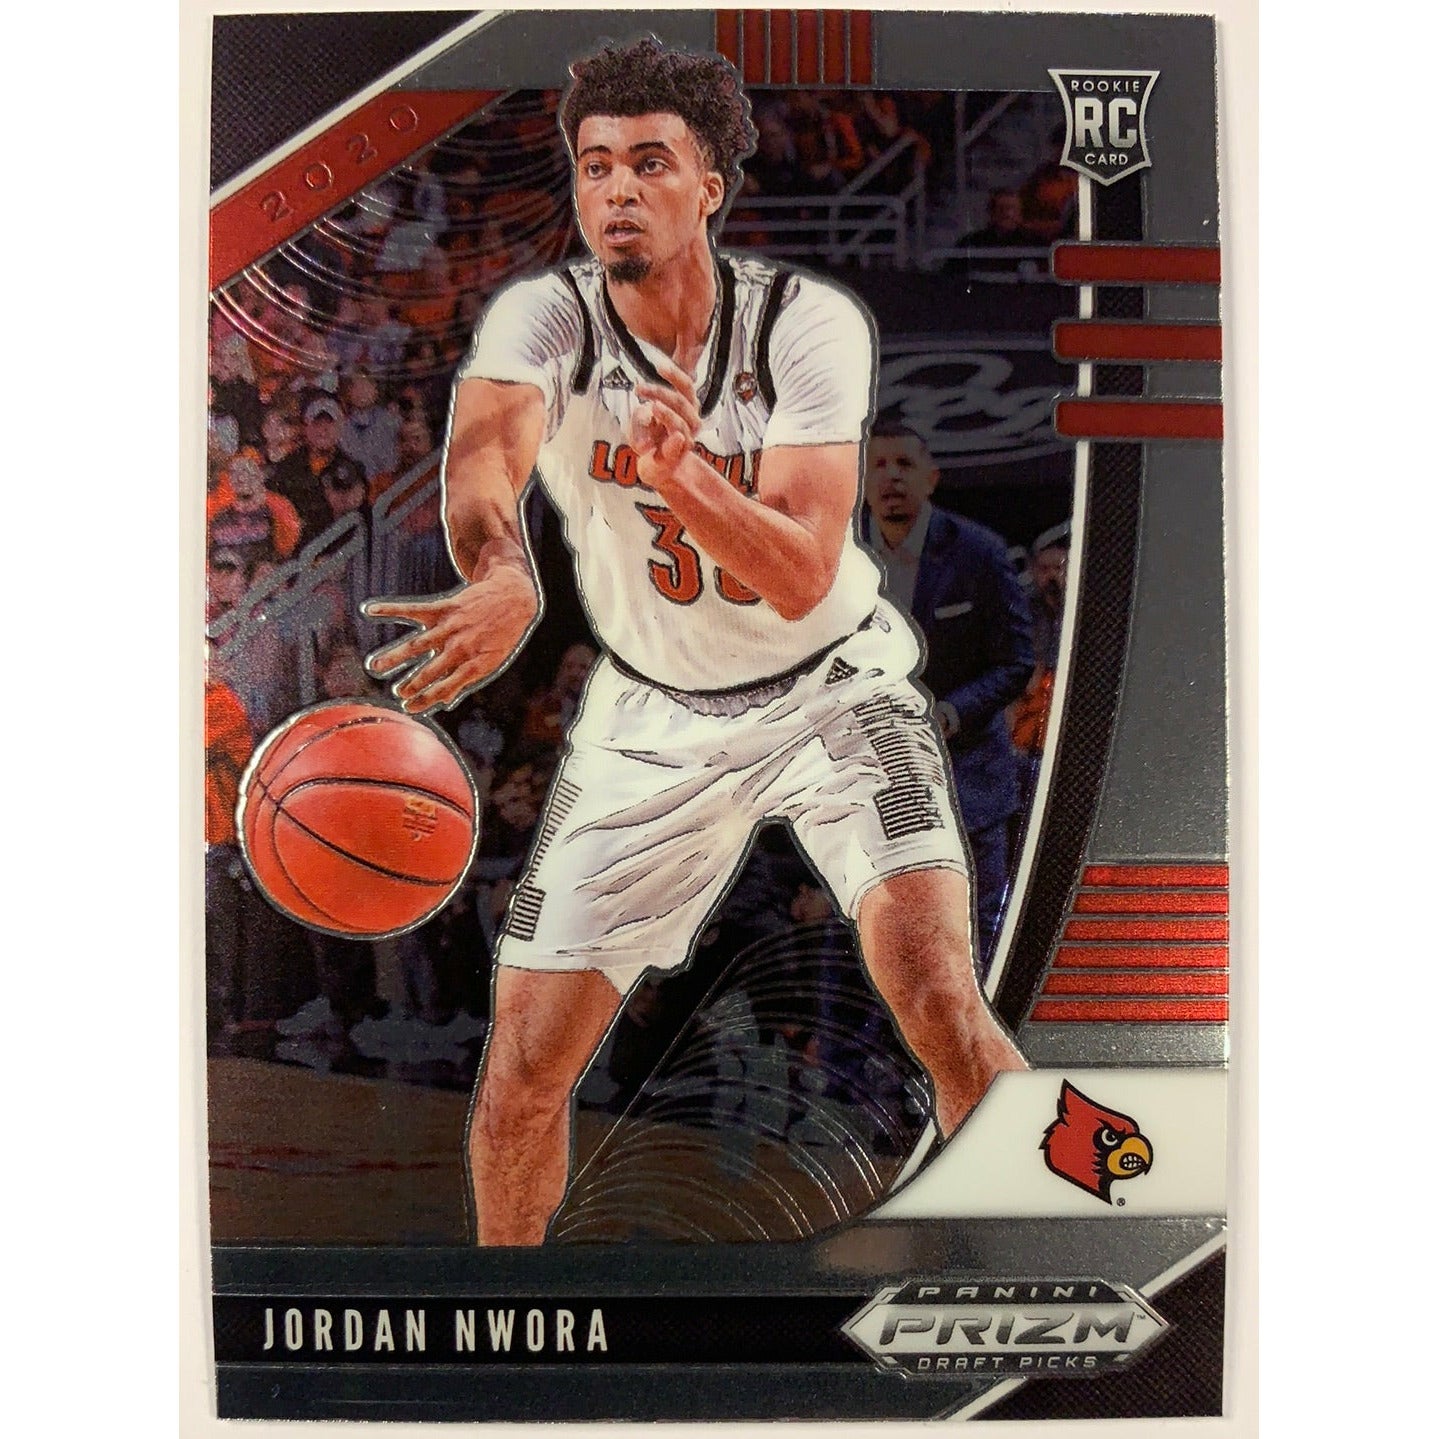  2020-21 Prizm Draft Picks Jordan Nwora RC  Local Legends Cards & Collectibles